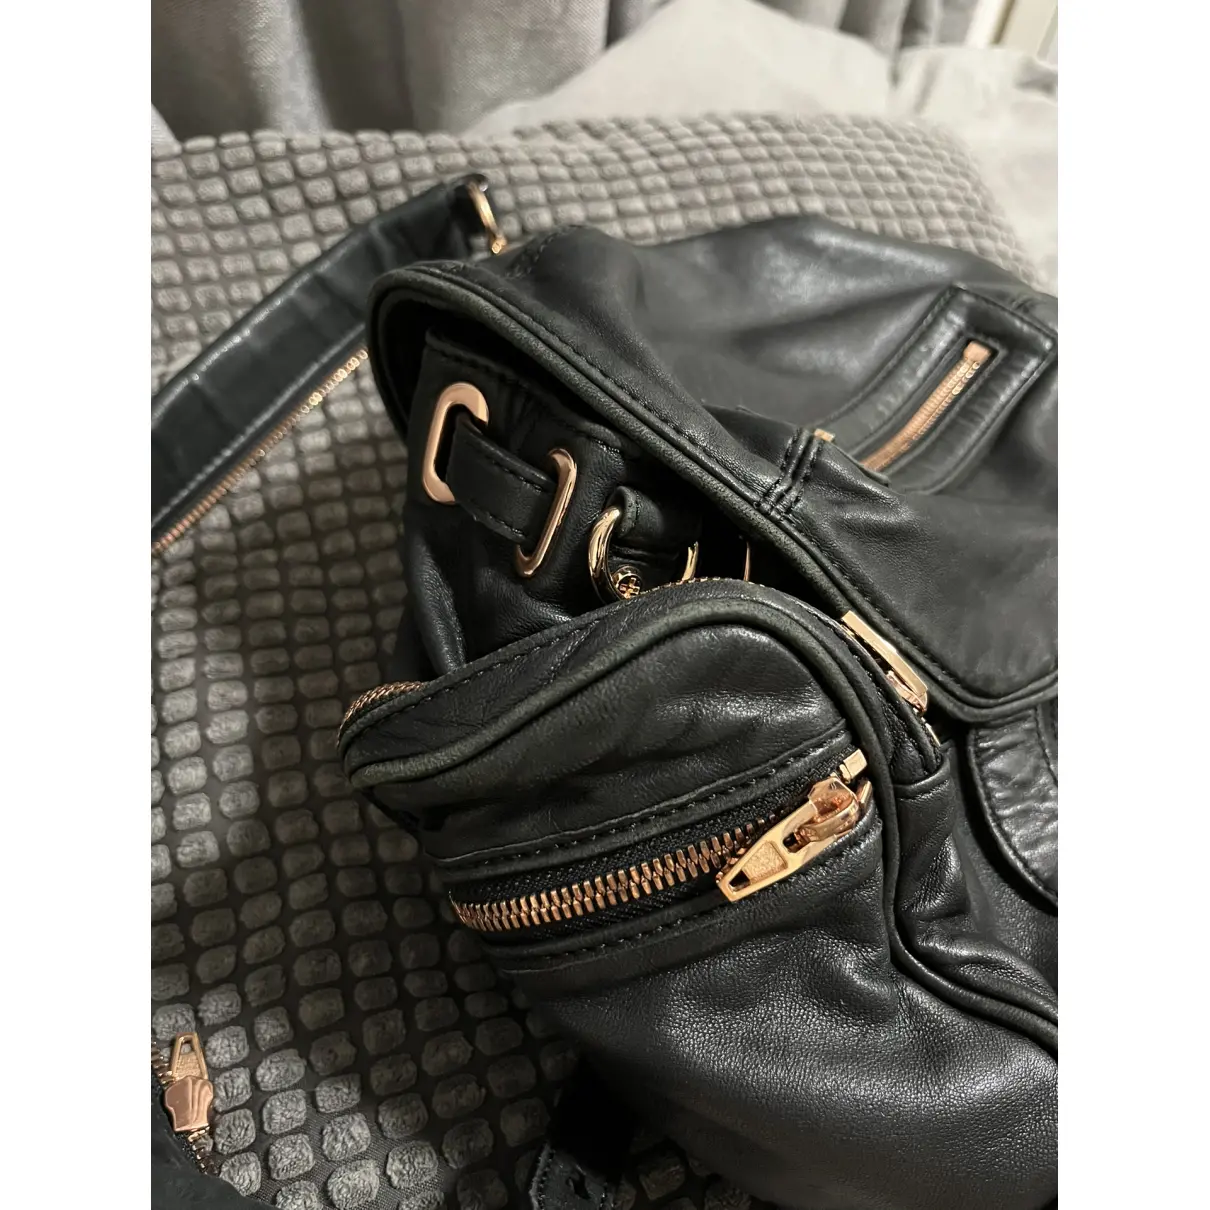 Buy Alexander Wang Marti leather backpack online